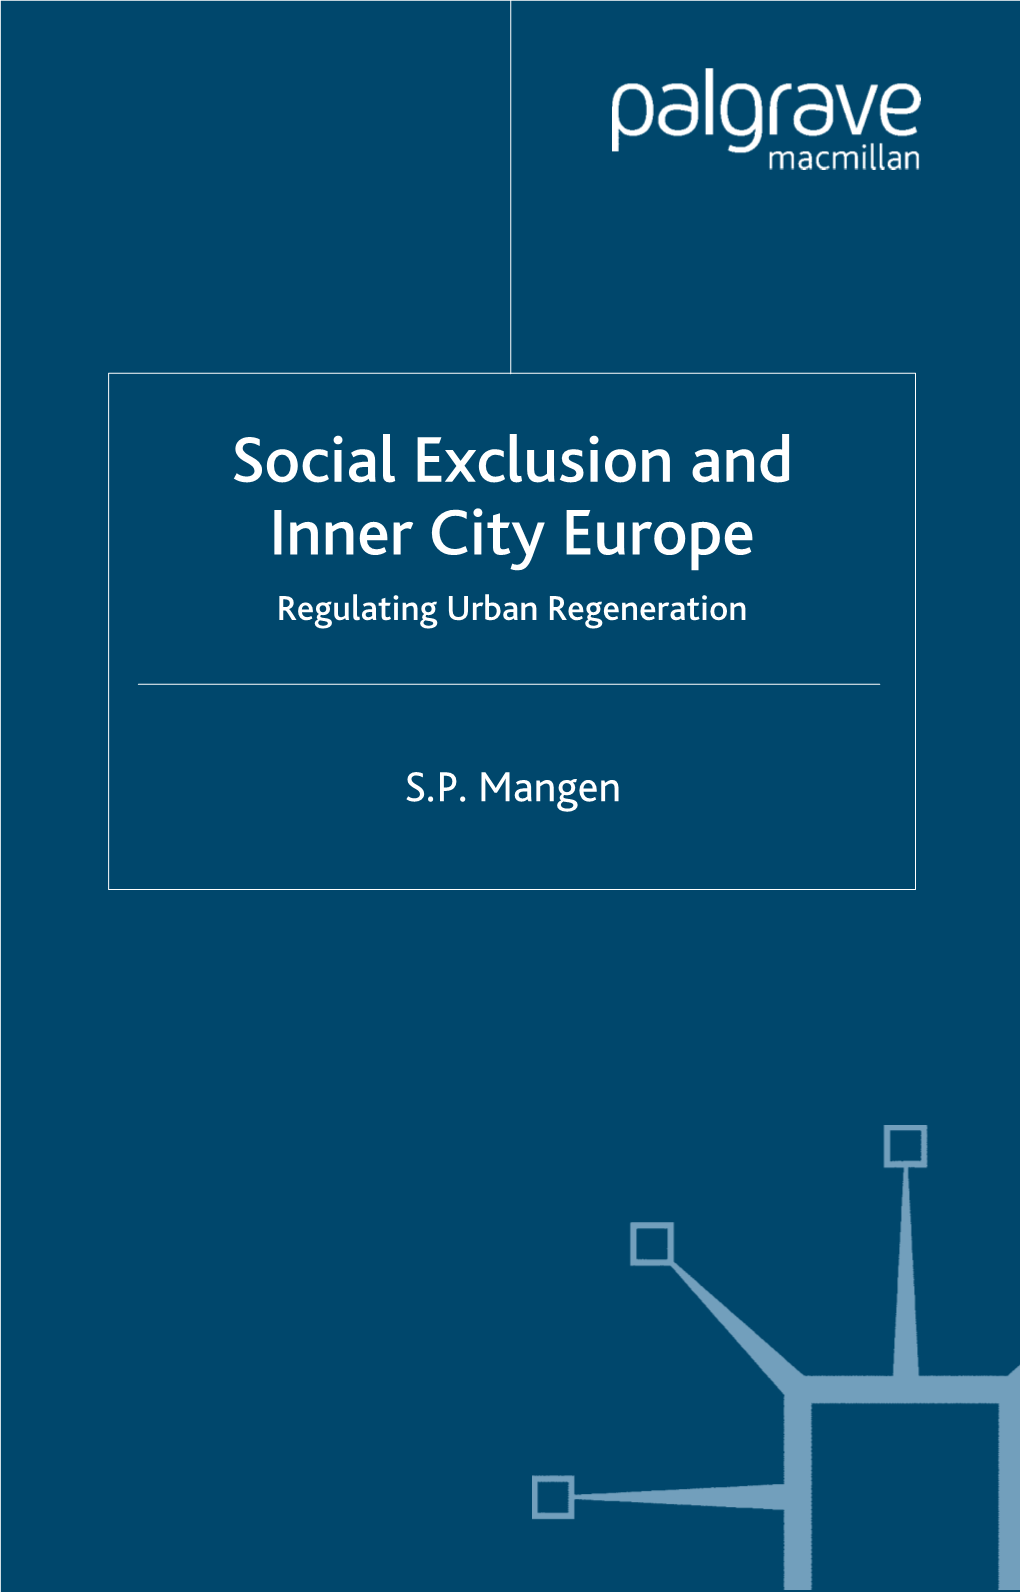 Regulating Urban Regeneration